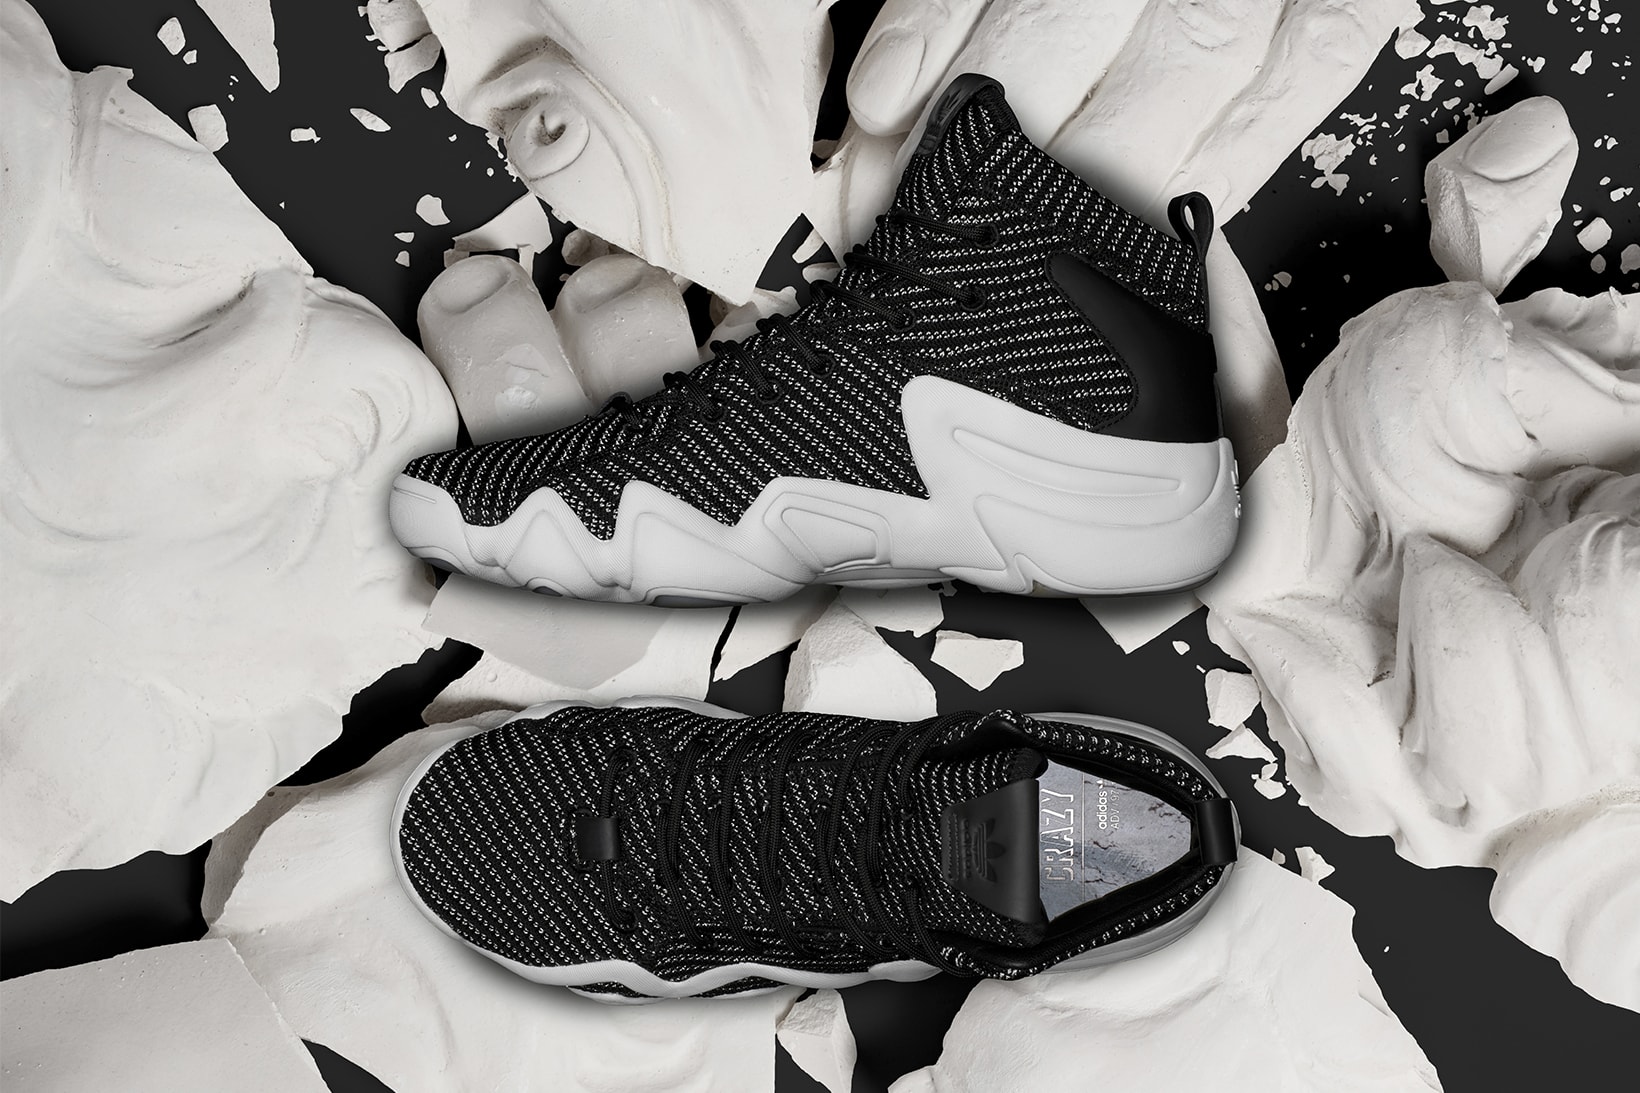 adidas Crazy 8 ADV PK Lusso Primeknit Kobe Bryant Sneakers Shoes Footwear 2017 August 11 Release Date Info black white basketball